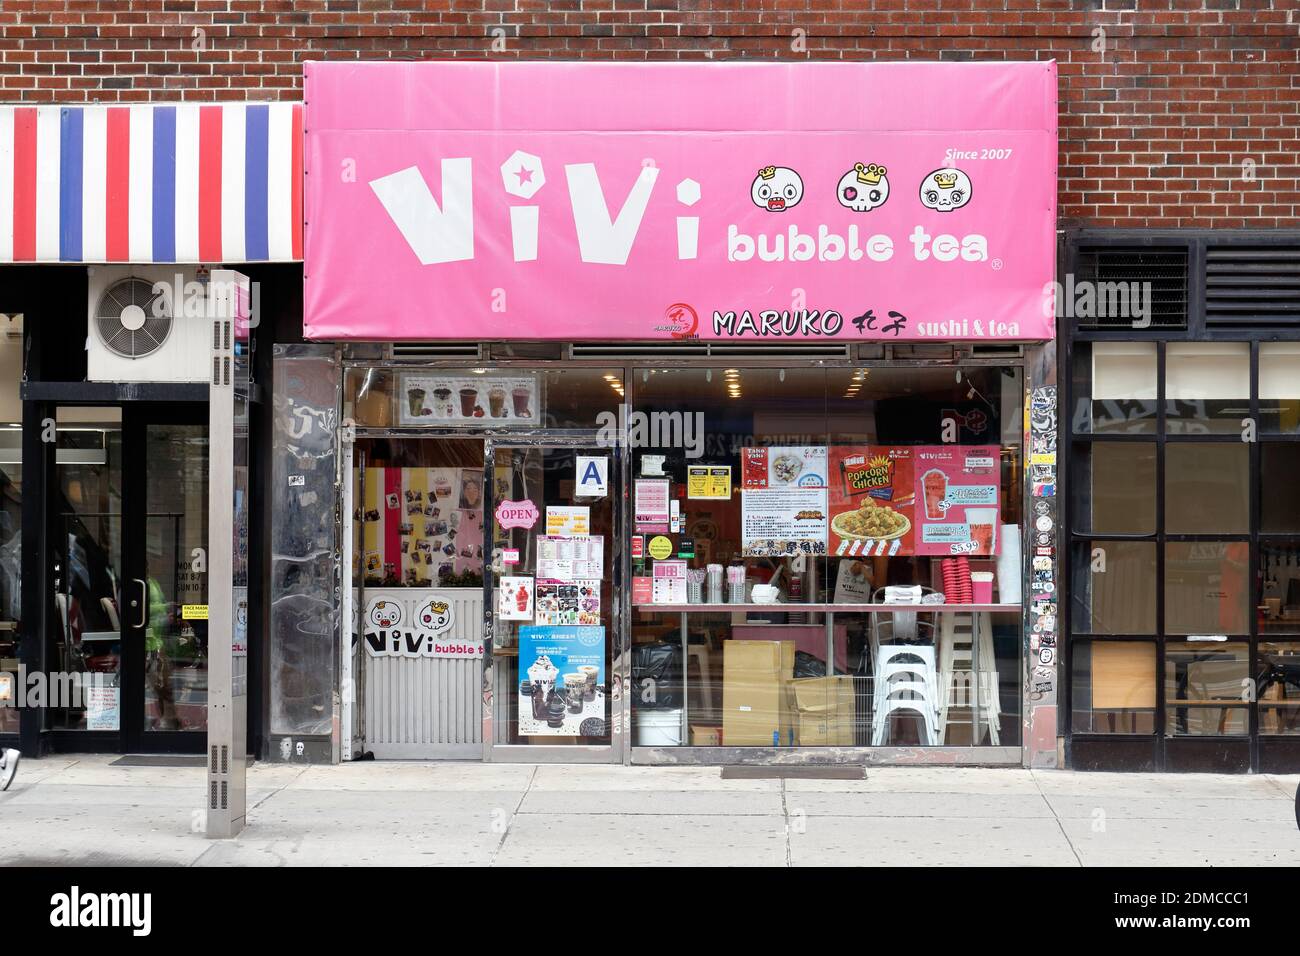 Vivi Bubble Tea, Maruko Sushi & Tea, 170 W 23rd St, New York, NYC storefront photo of a bubble tea shop in the Manhattan's Chelsea neighborhood. Stock Photo